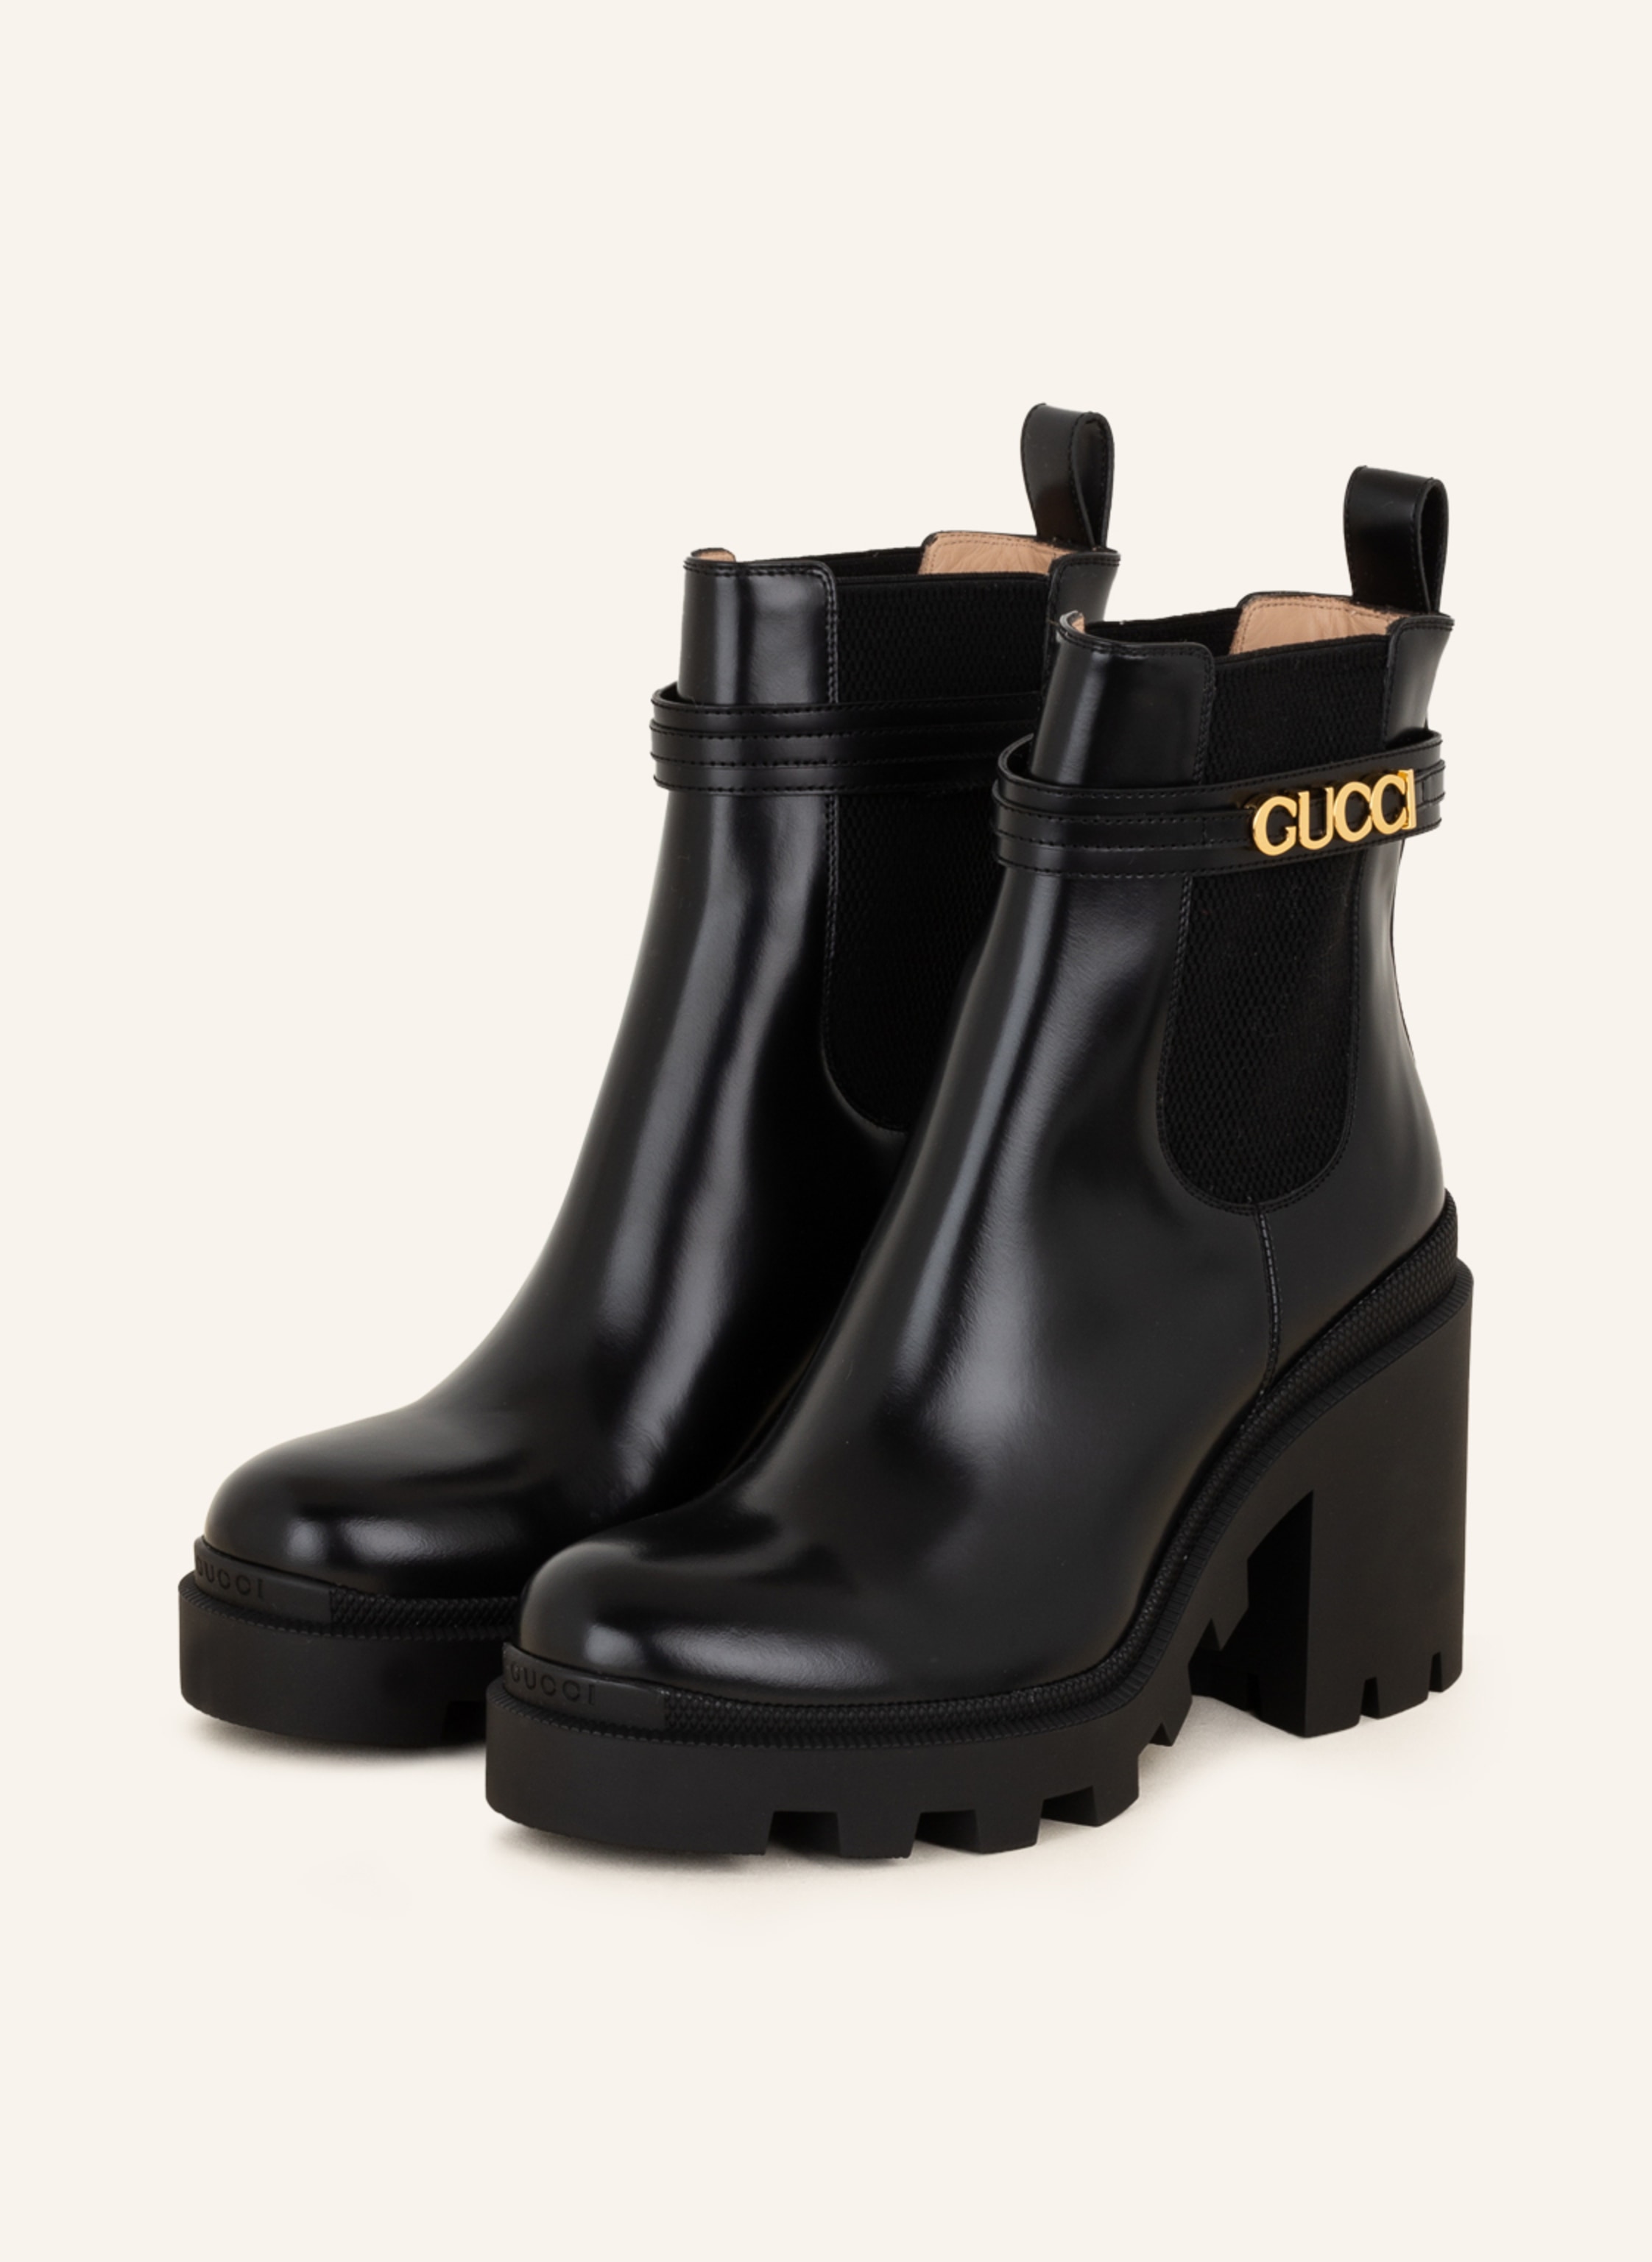 GUCCI boots in 1000 black/black | Breuninger